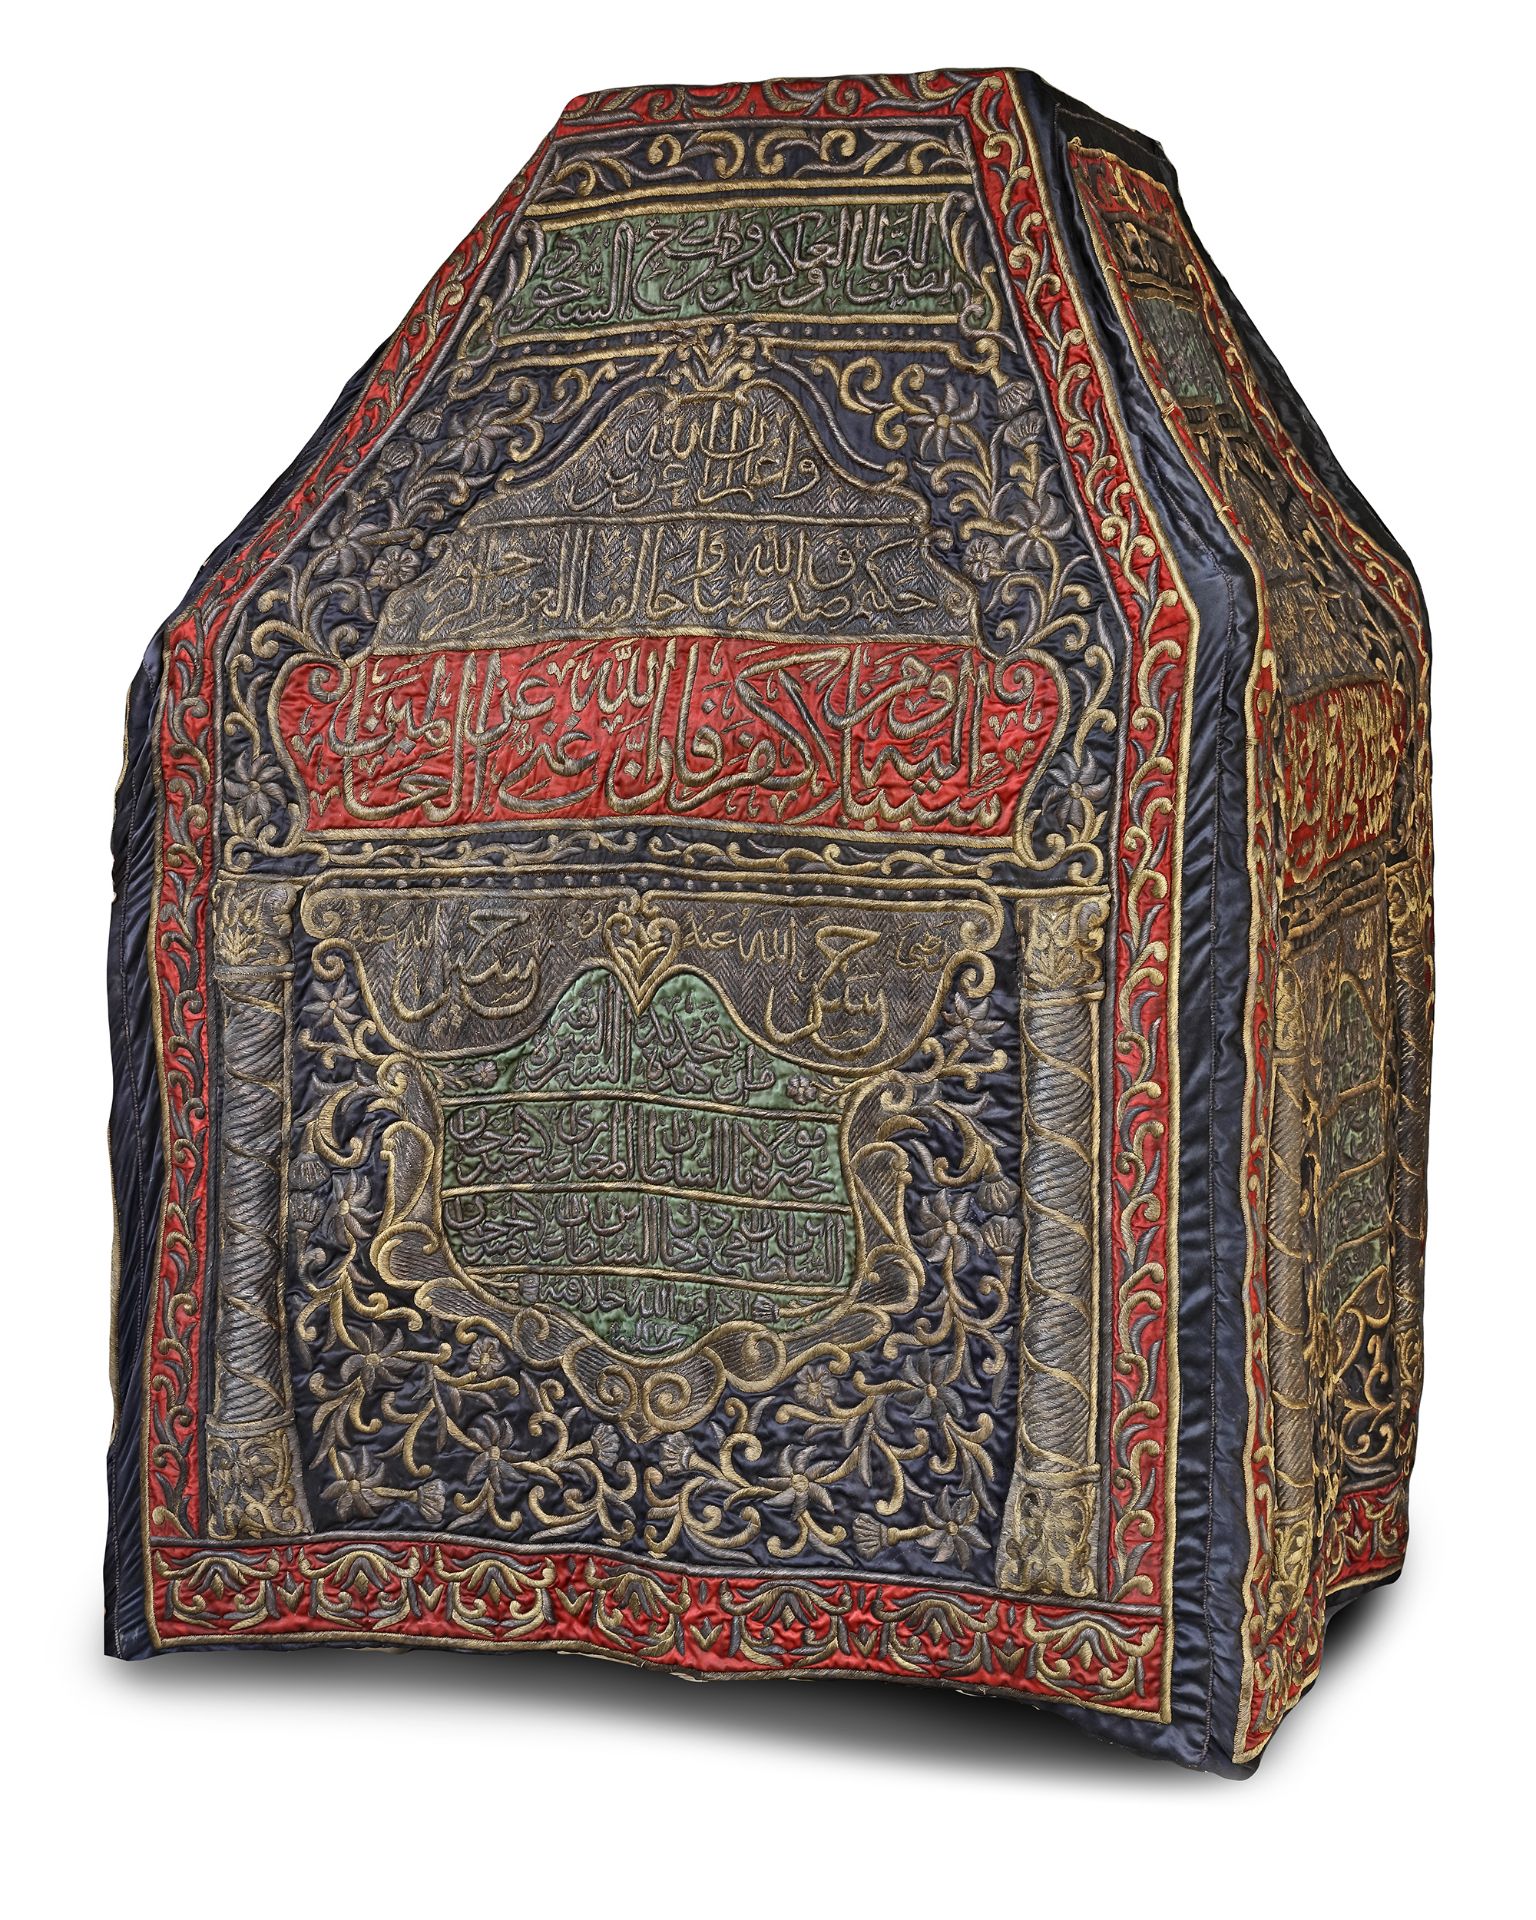 AN OTTOMAN METAL-THREAD EMBROIDERED MAQAM IBRAHIM COVER, 1272 AH/1855 AD - Image 6 of 6